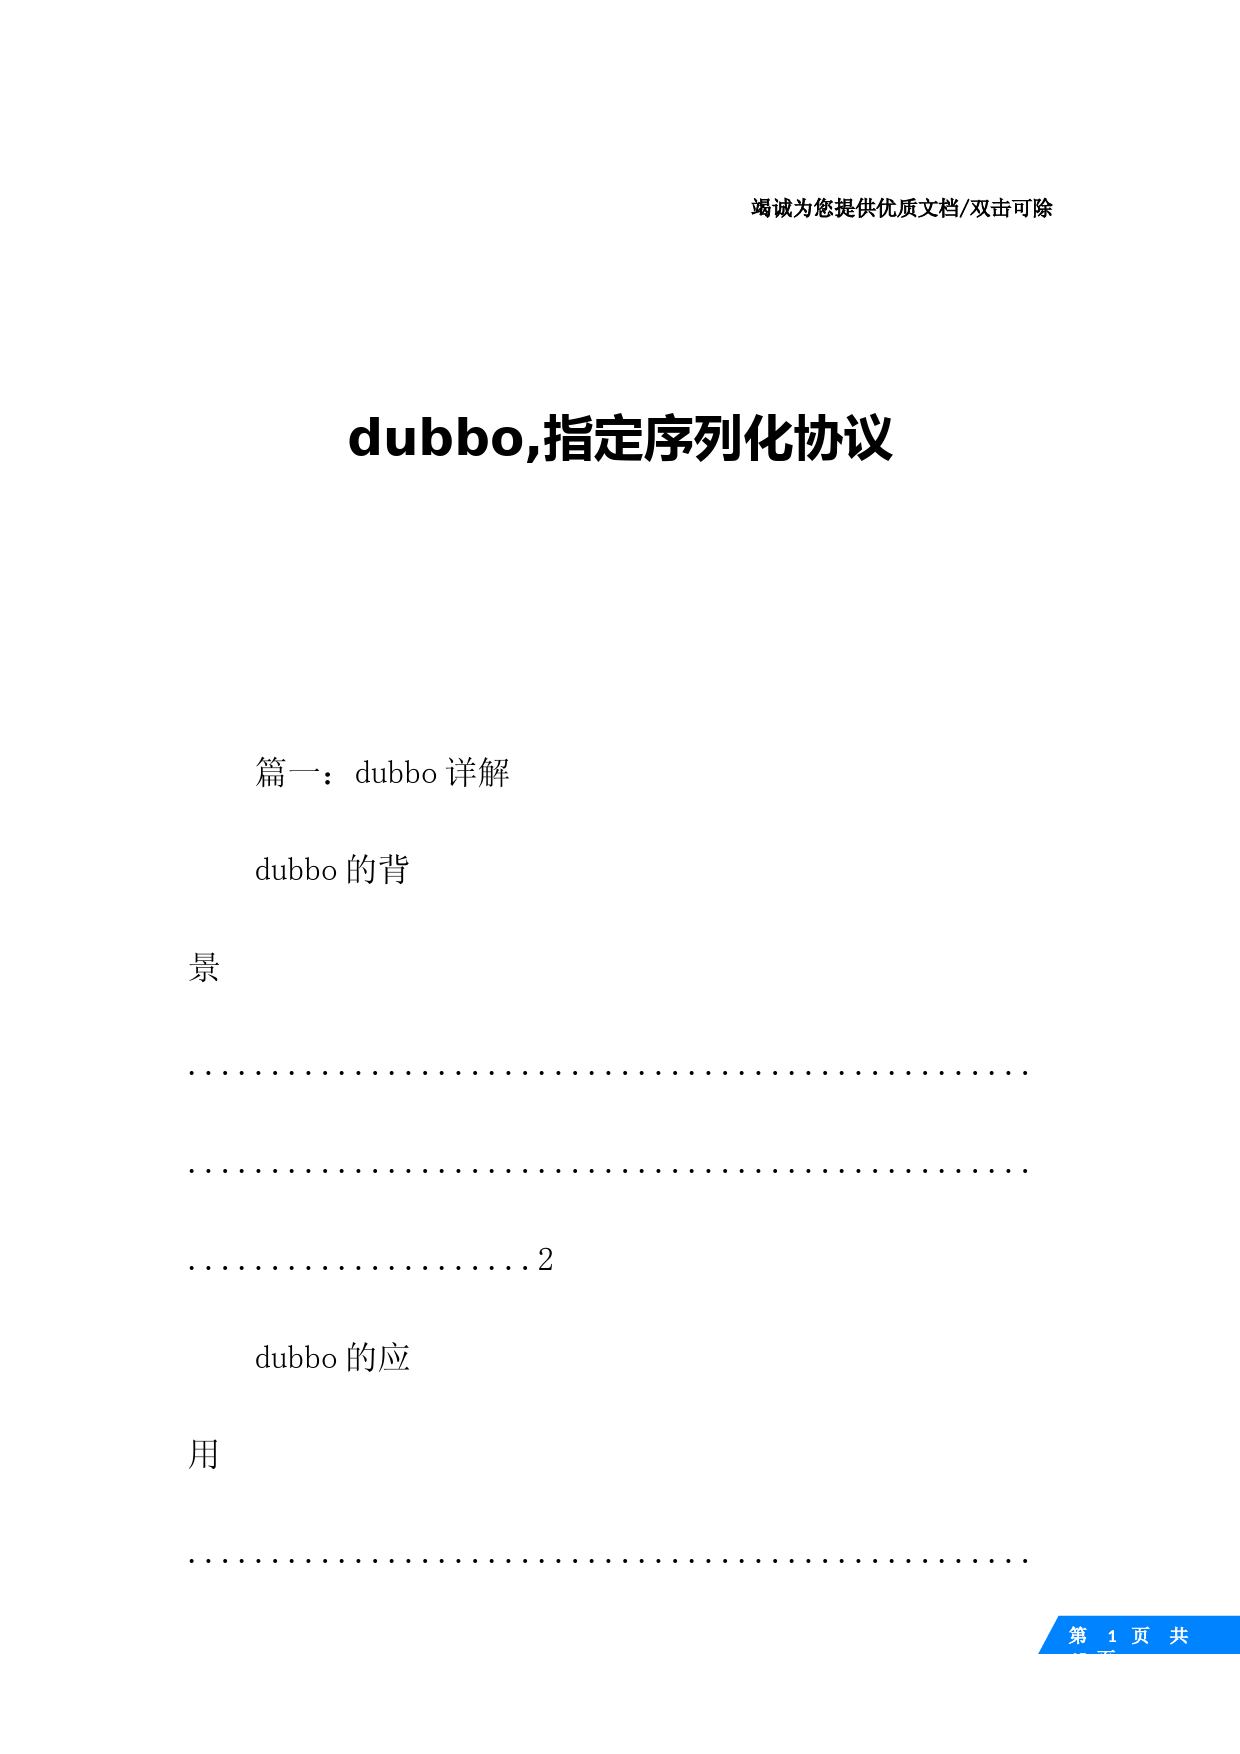 dubbo-指定序列化协议